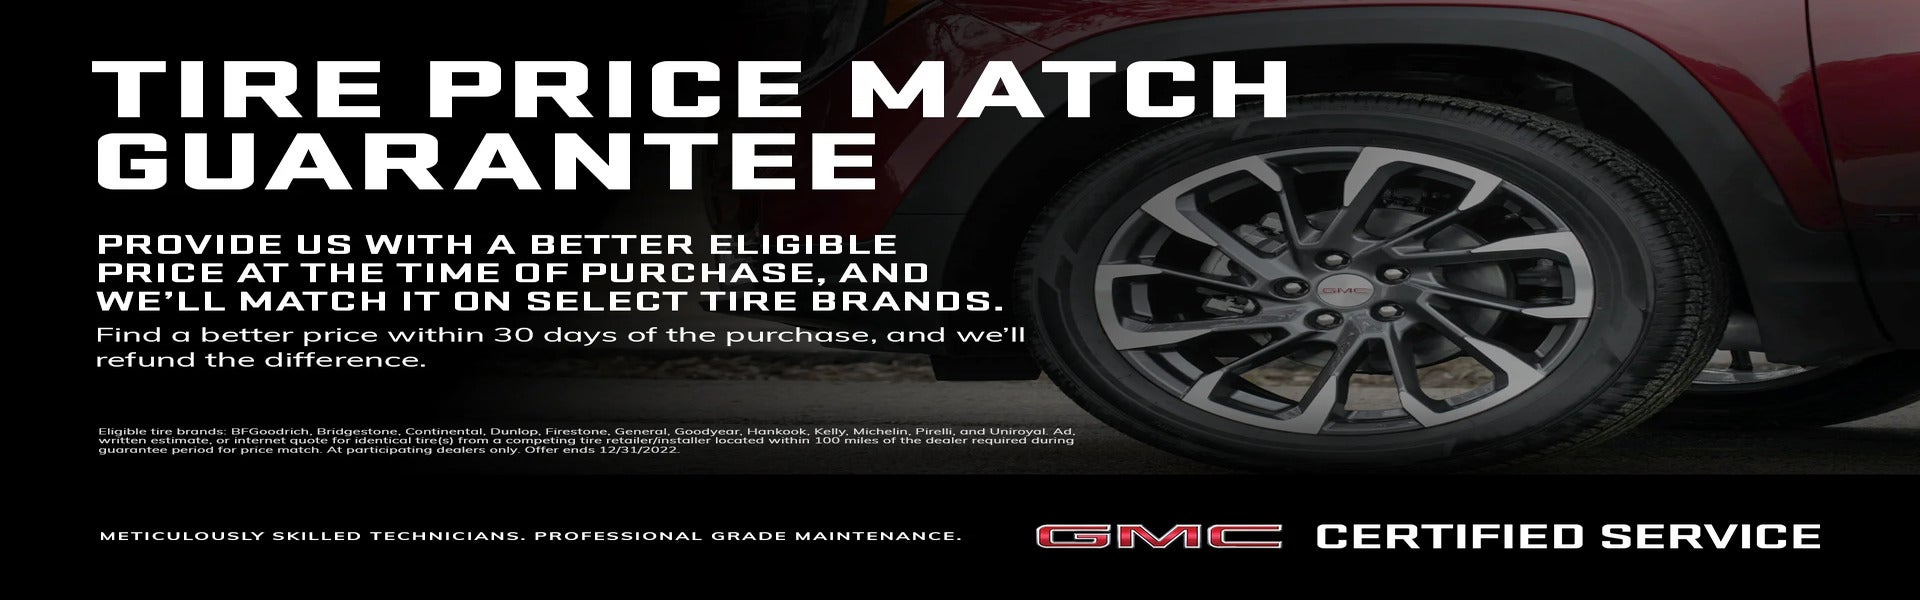 Tire Price Match Guarantee